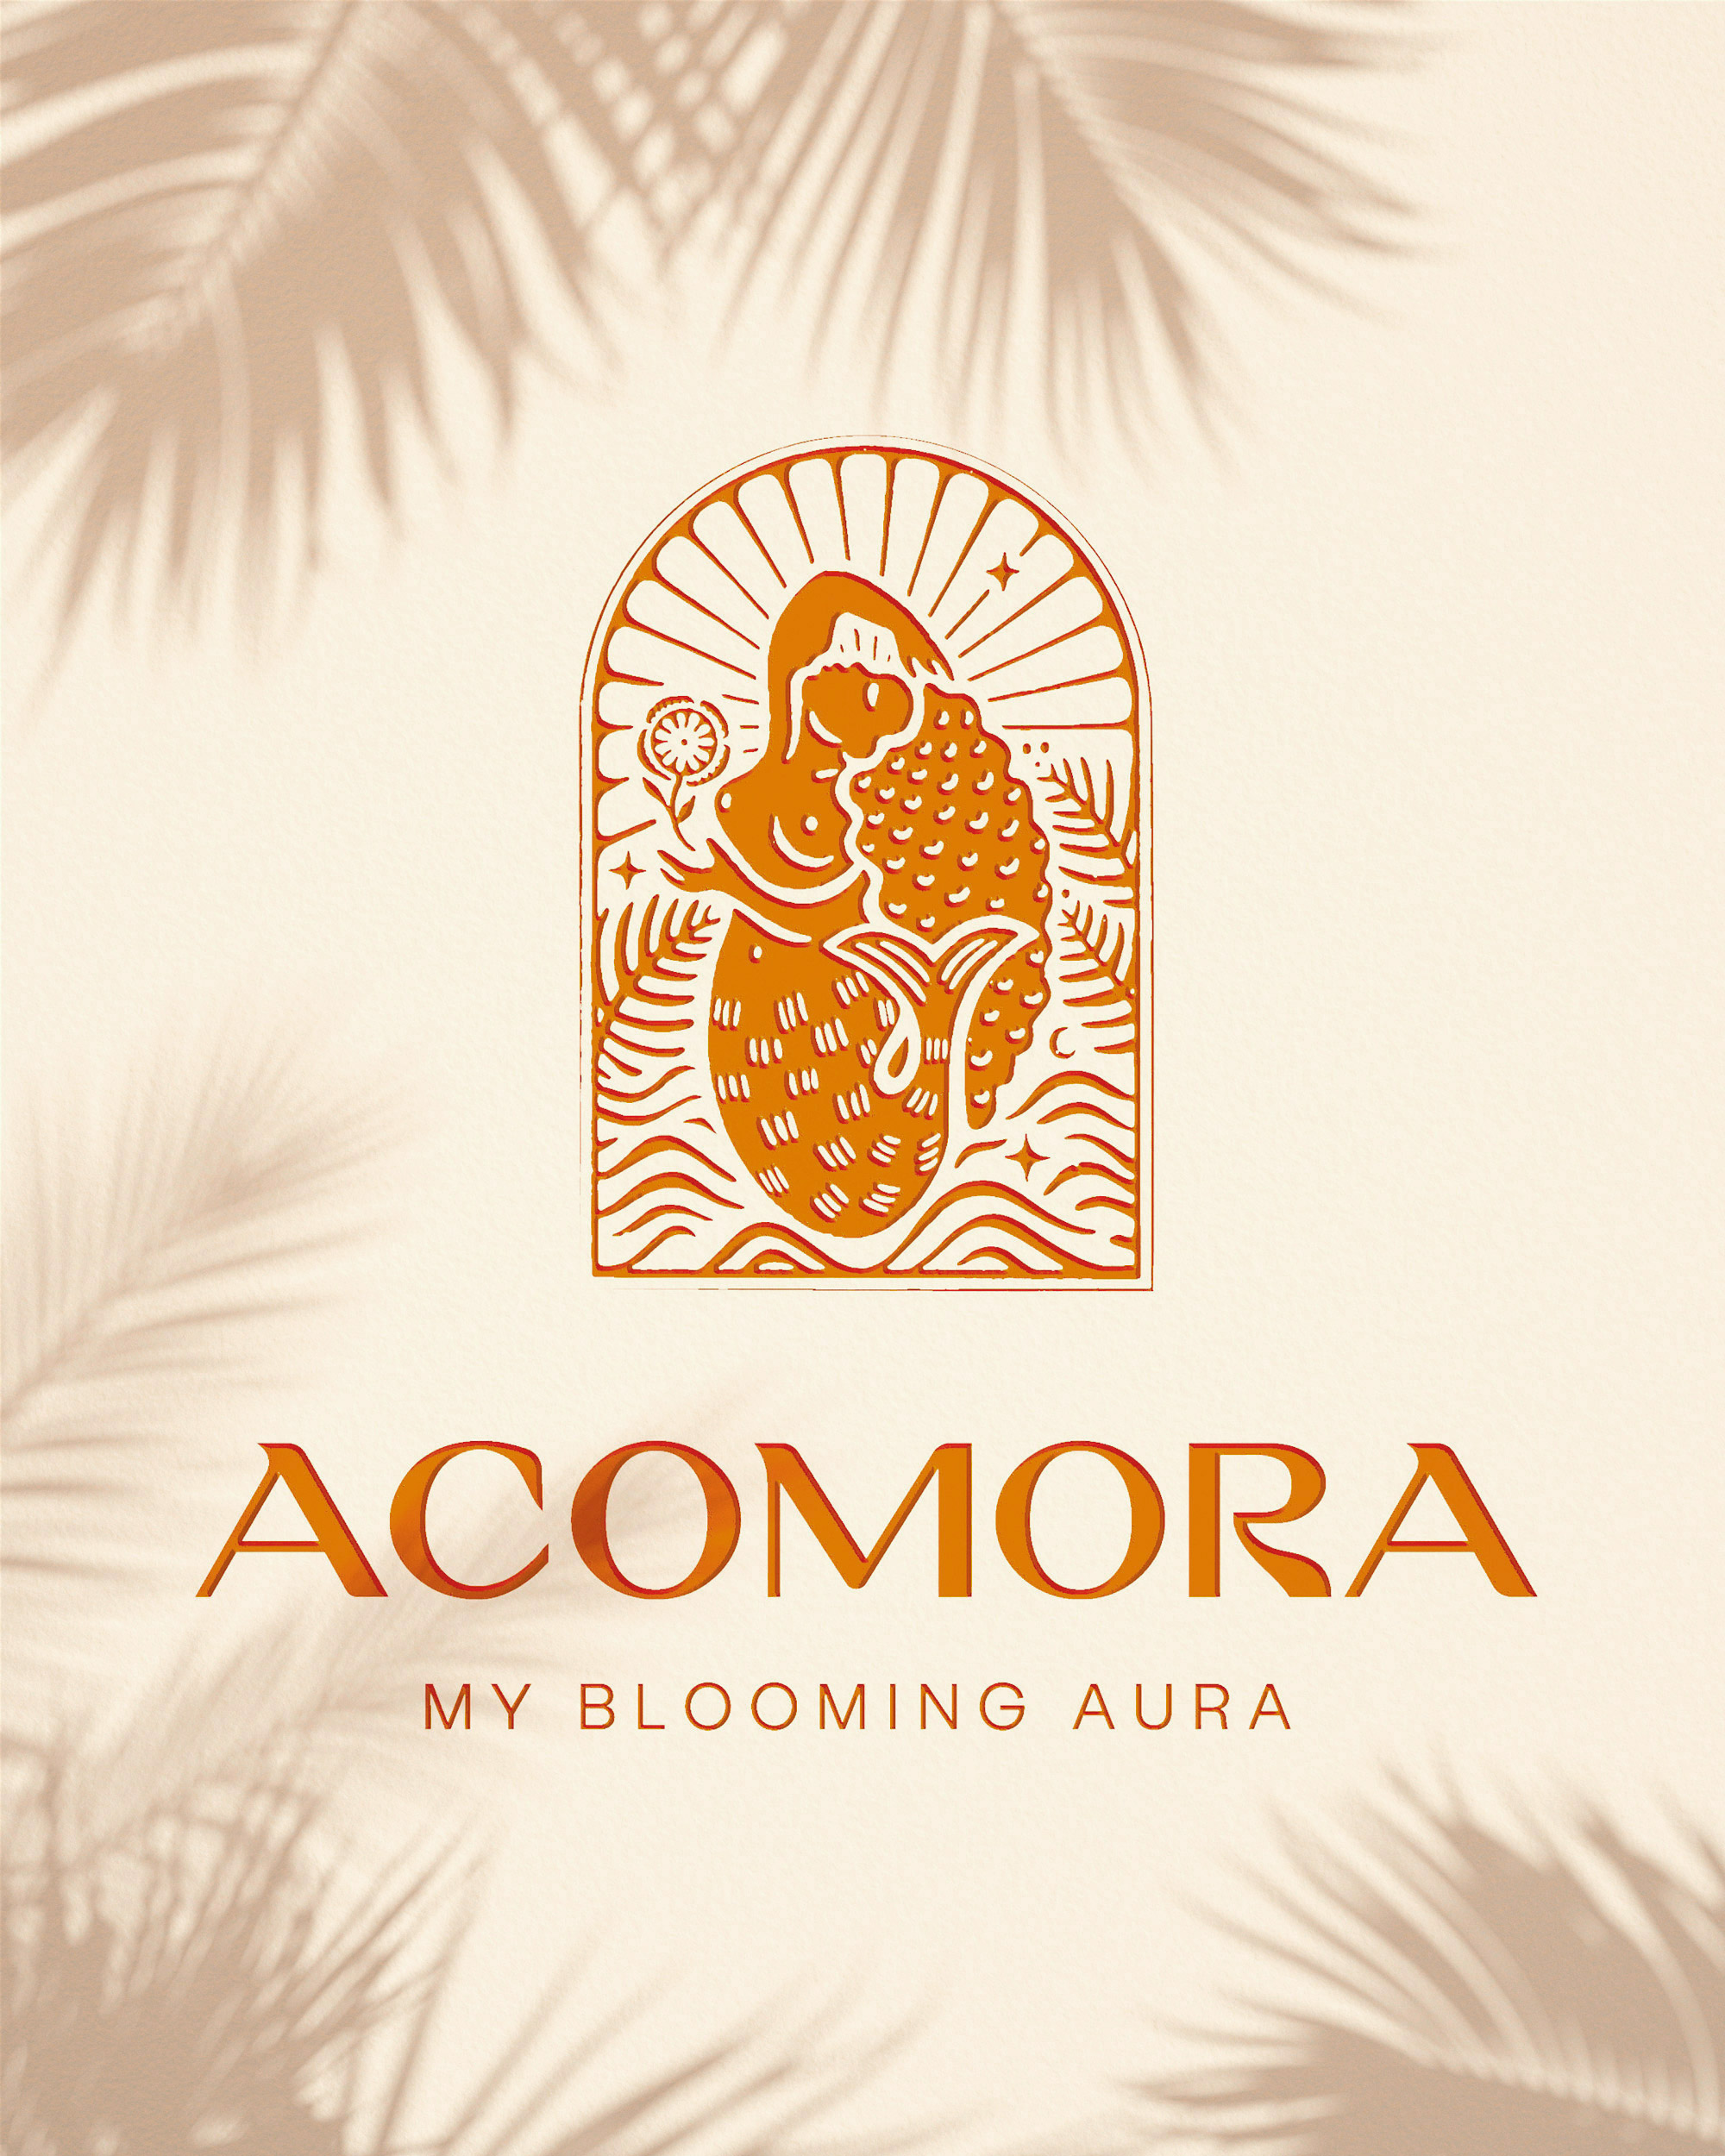 Acomora Cosmetics Packaging Design Created by Petitmoulin Studio